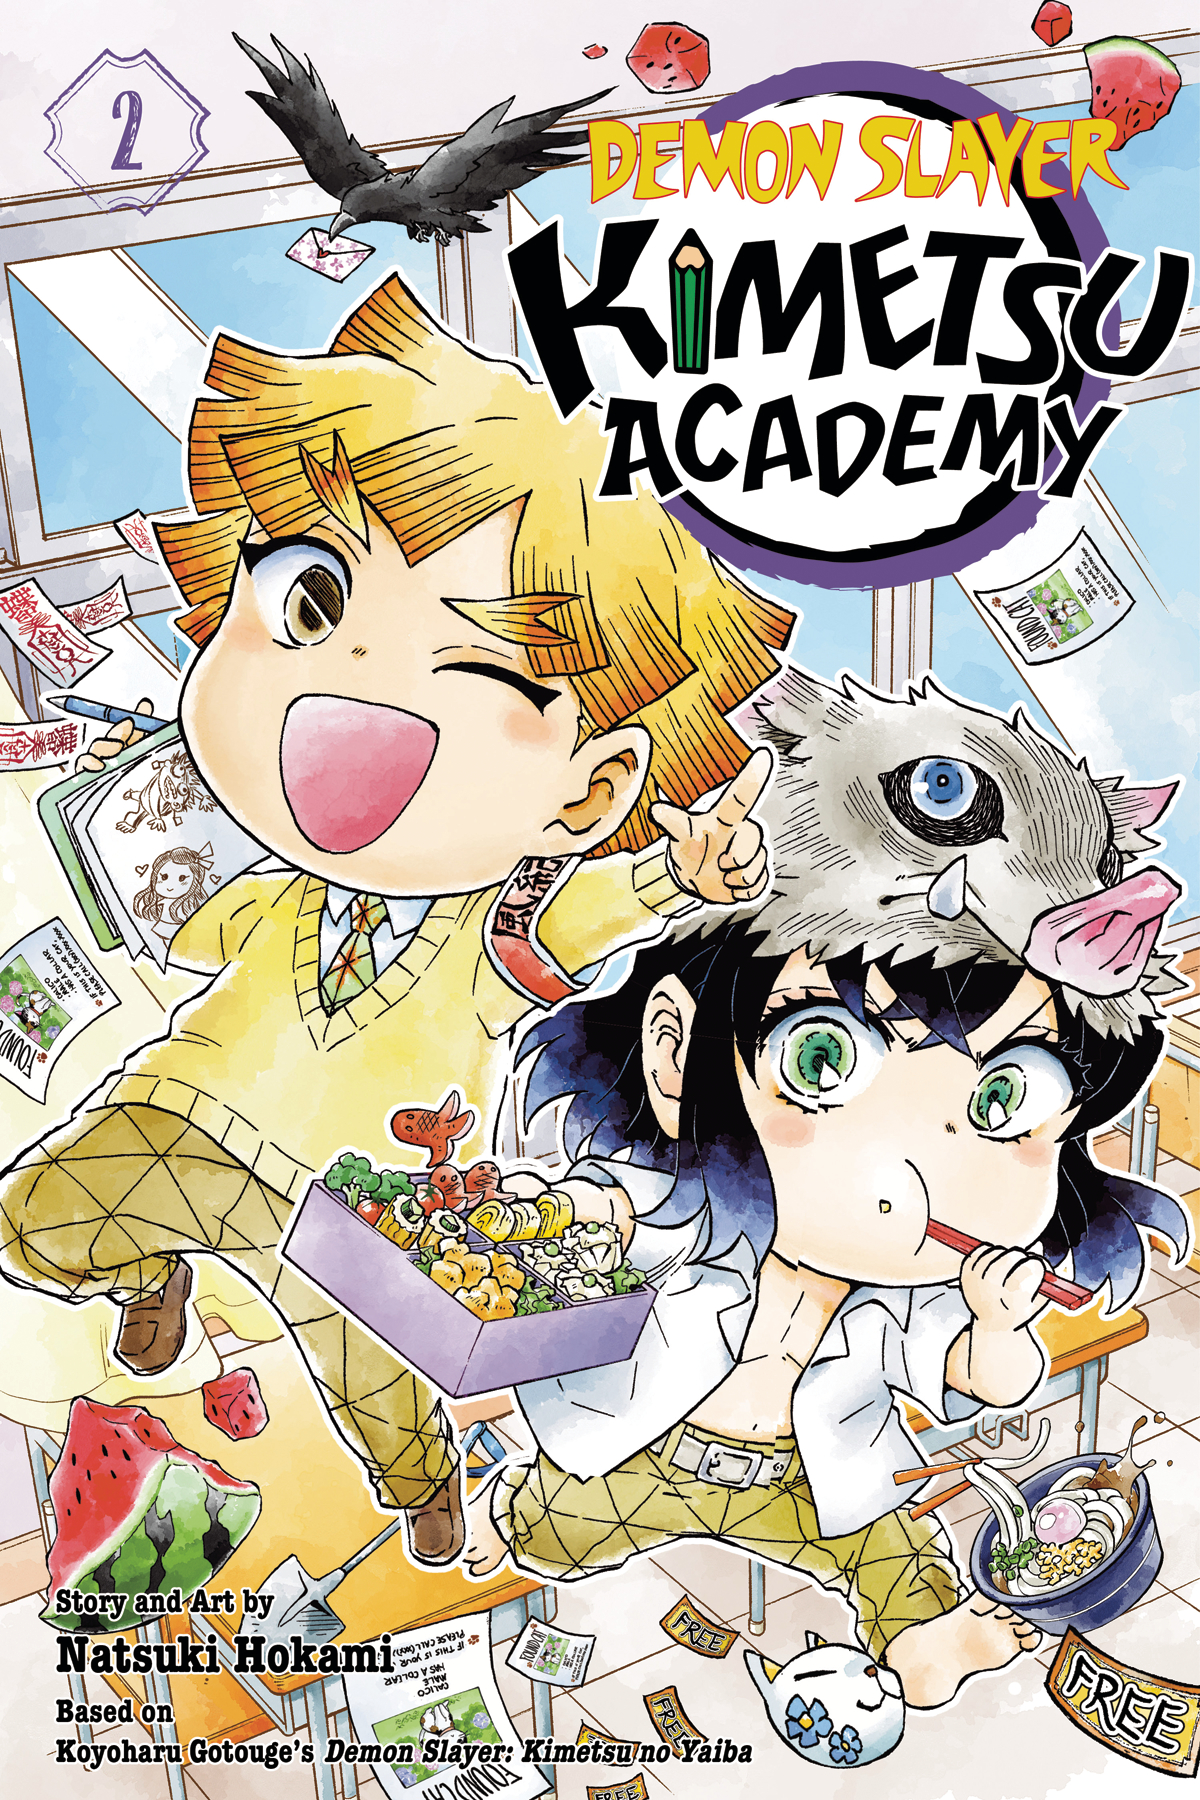 Demon Slayer Kimetsu Academy Manga Volume 2